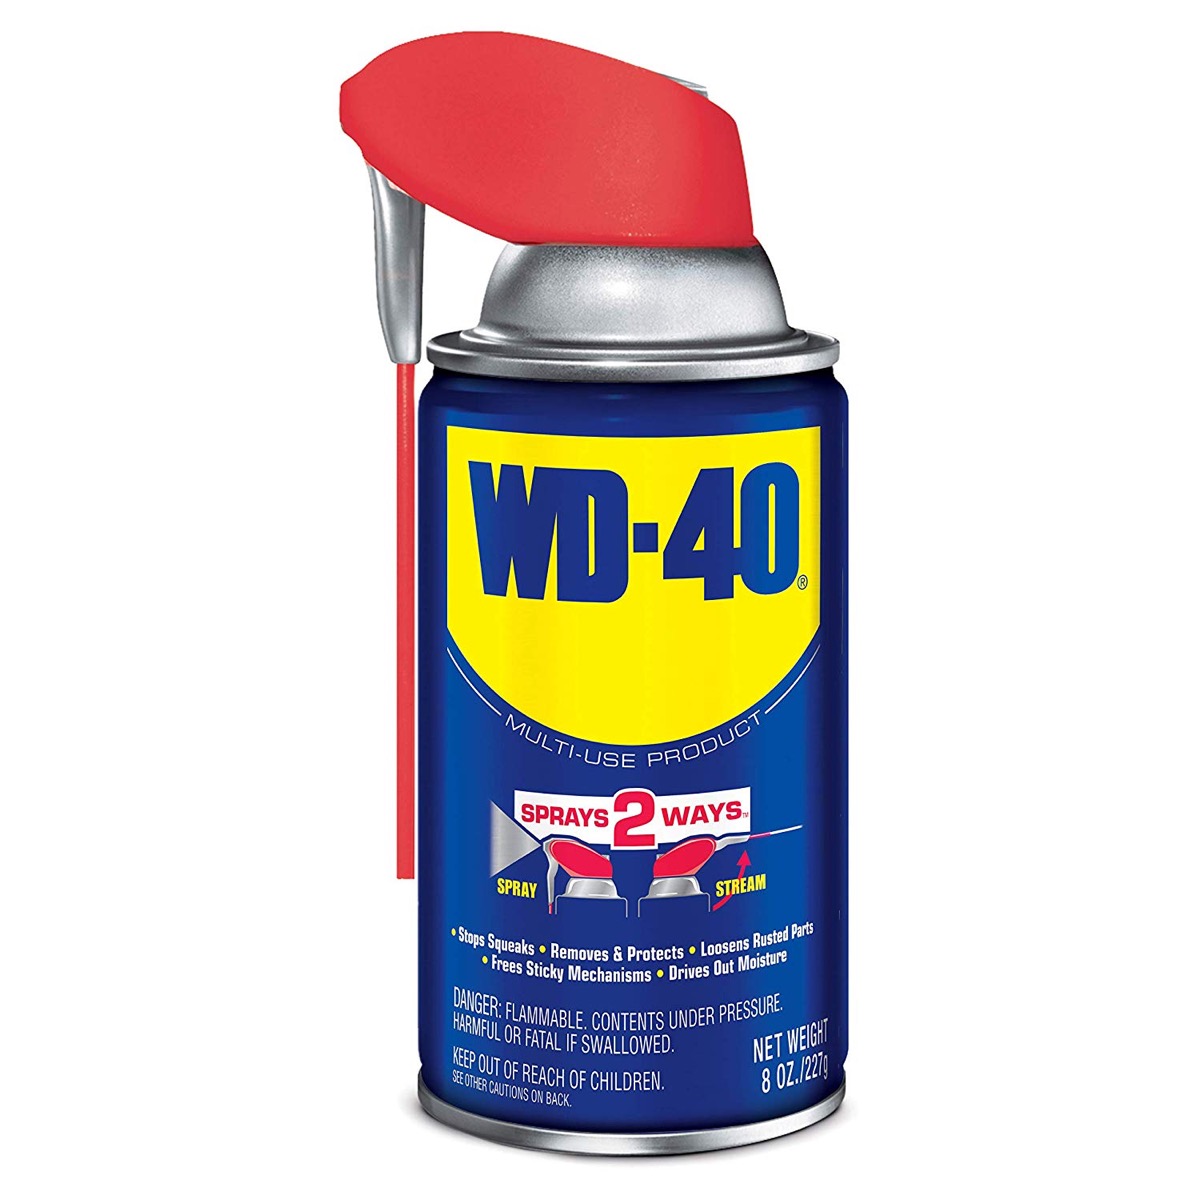 wd40 spray, essential home supplies